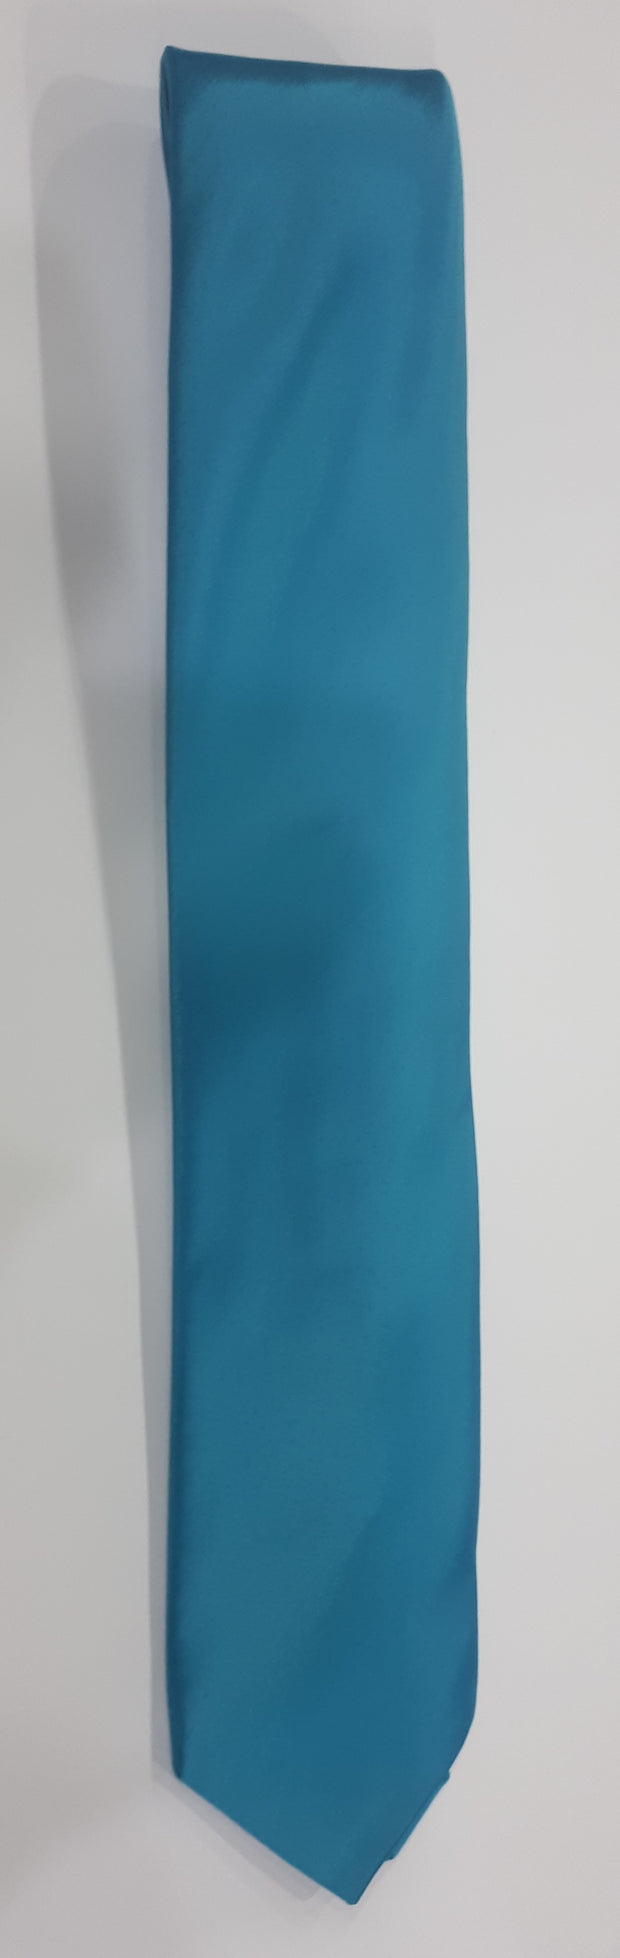 formal satin tie turquoise